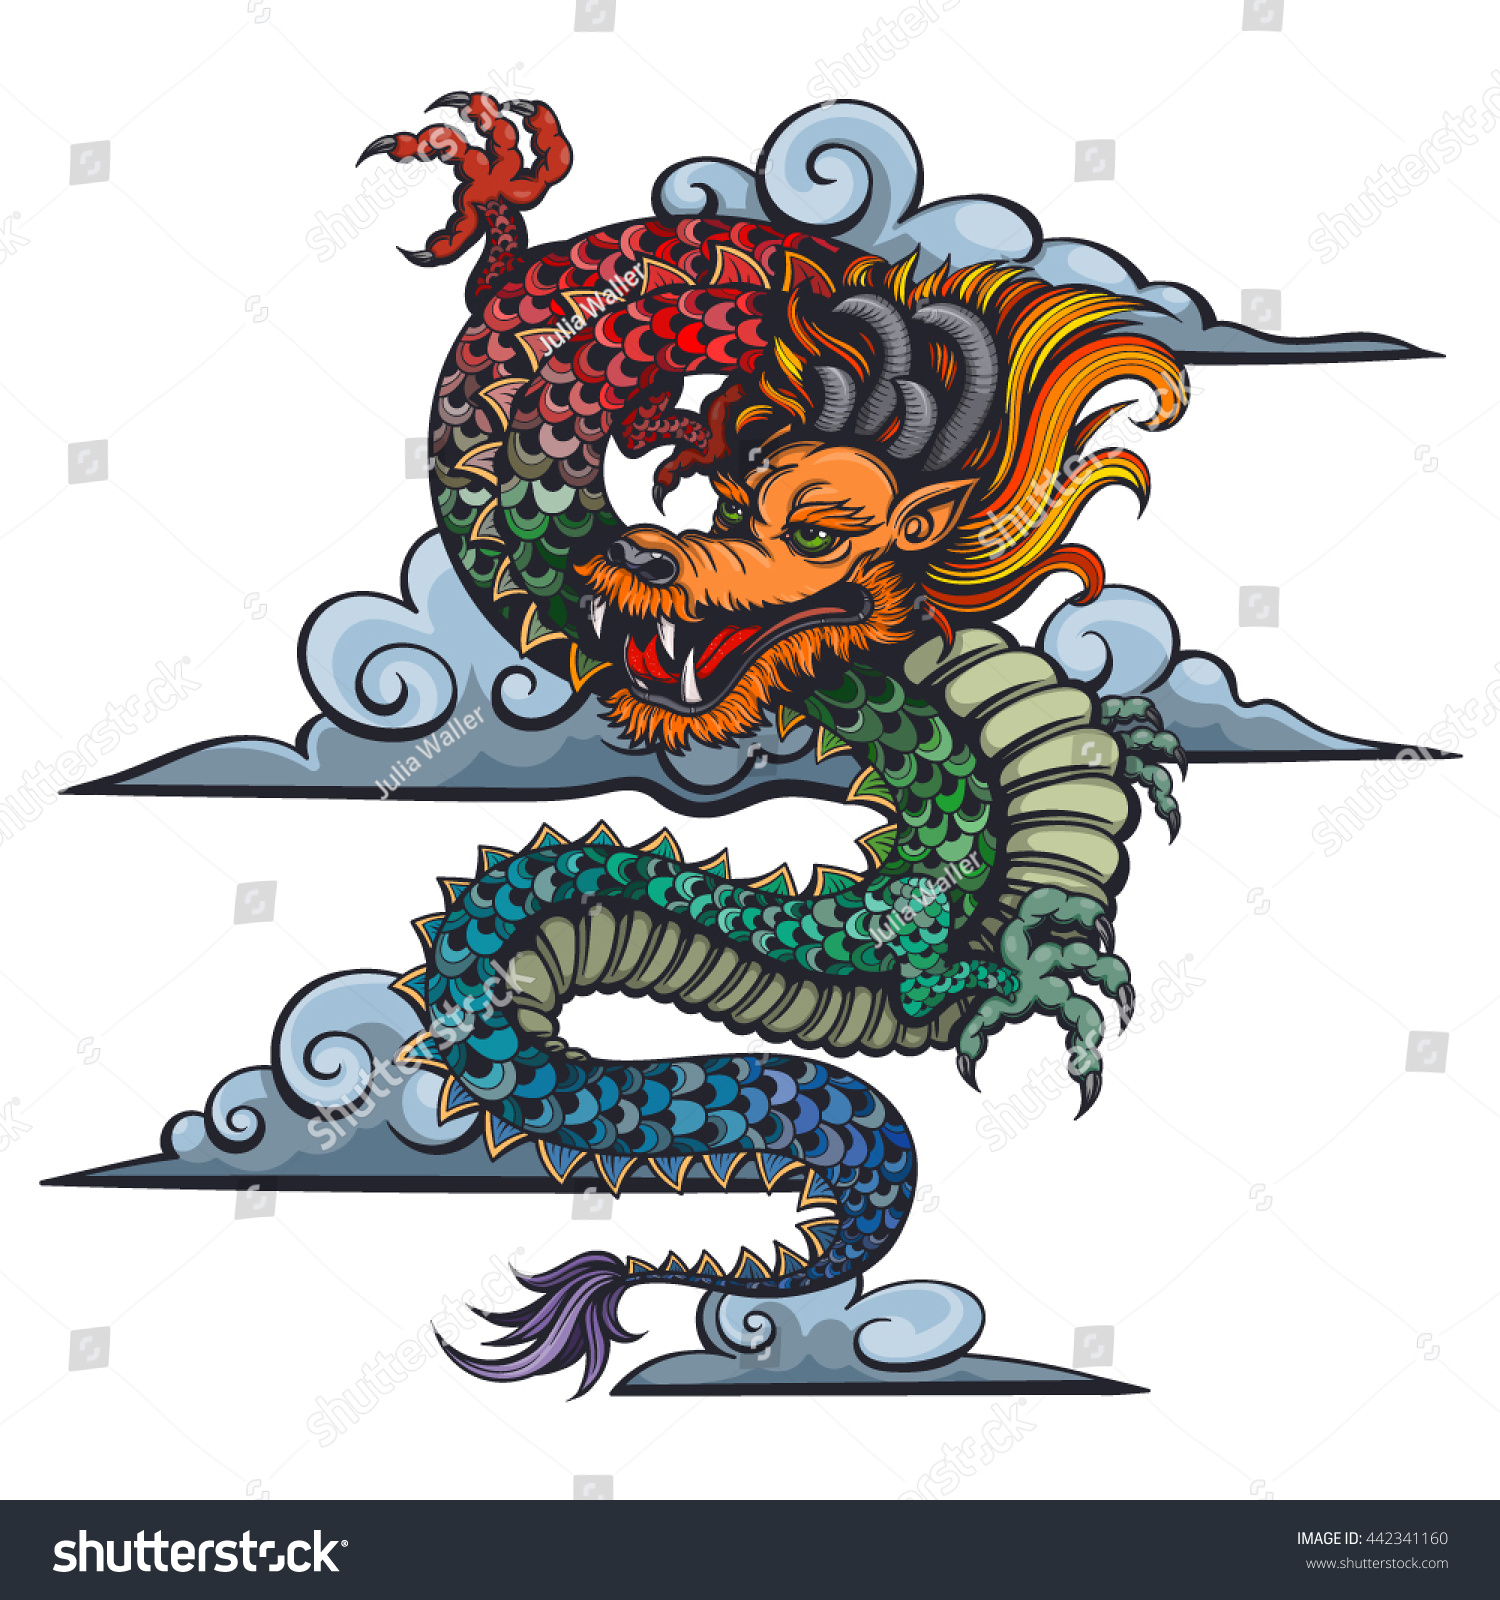 Vector Color Dragon Illustration - 442341160 : Shutterstock